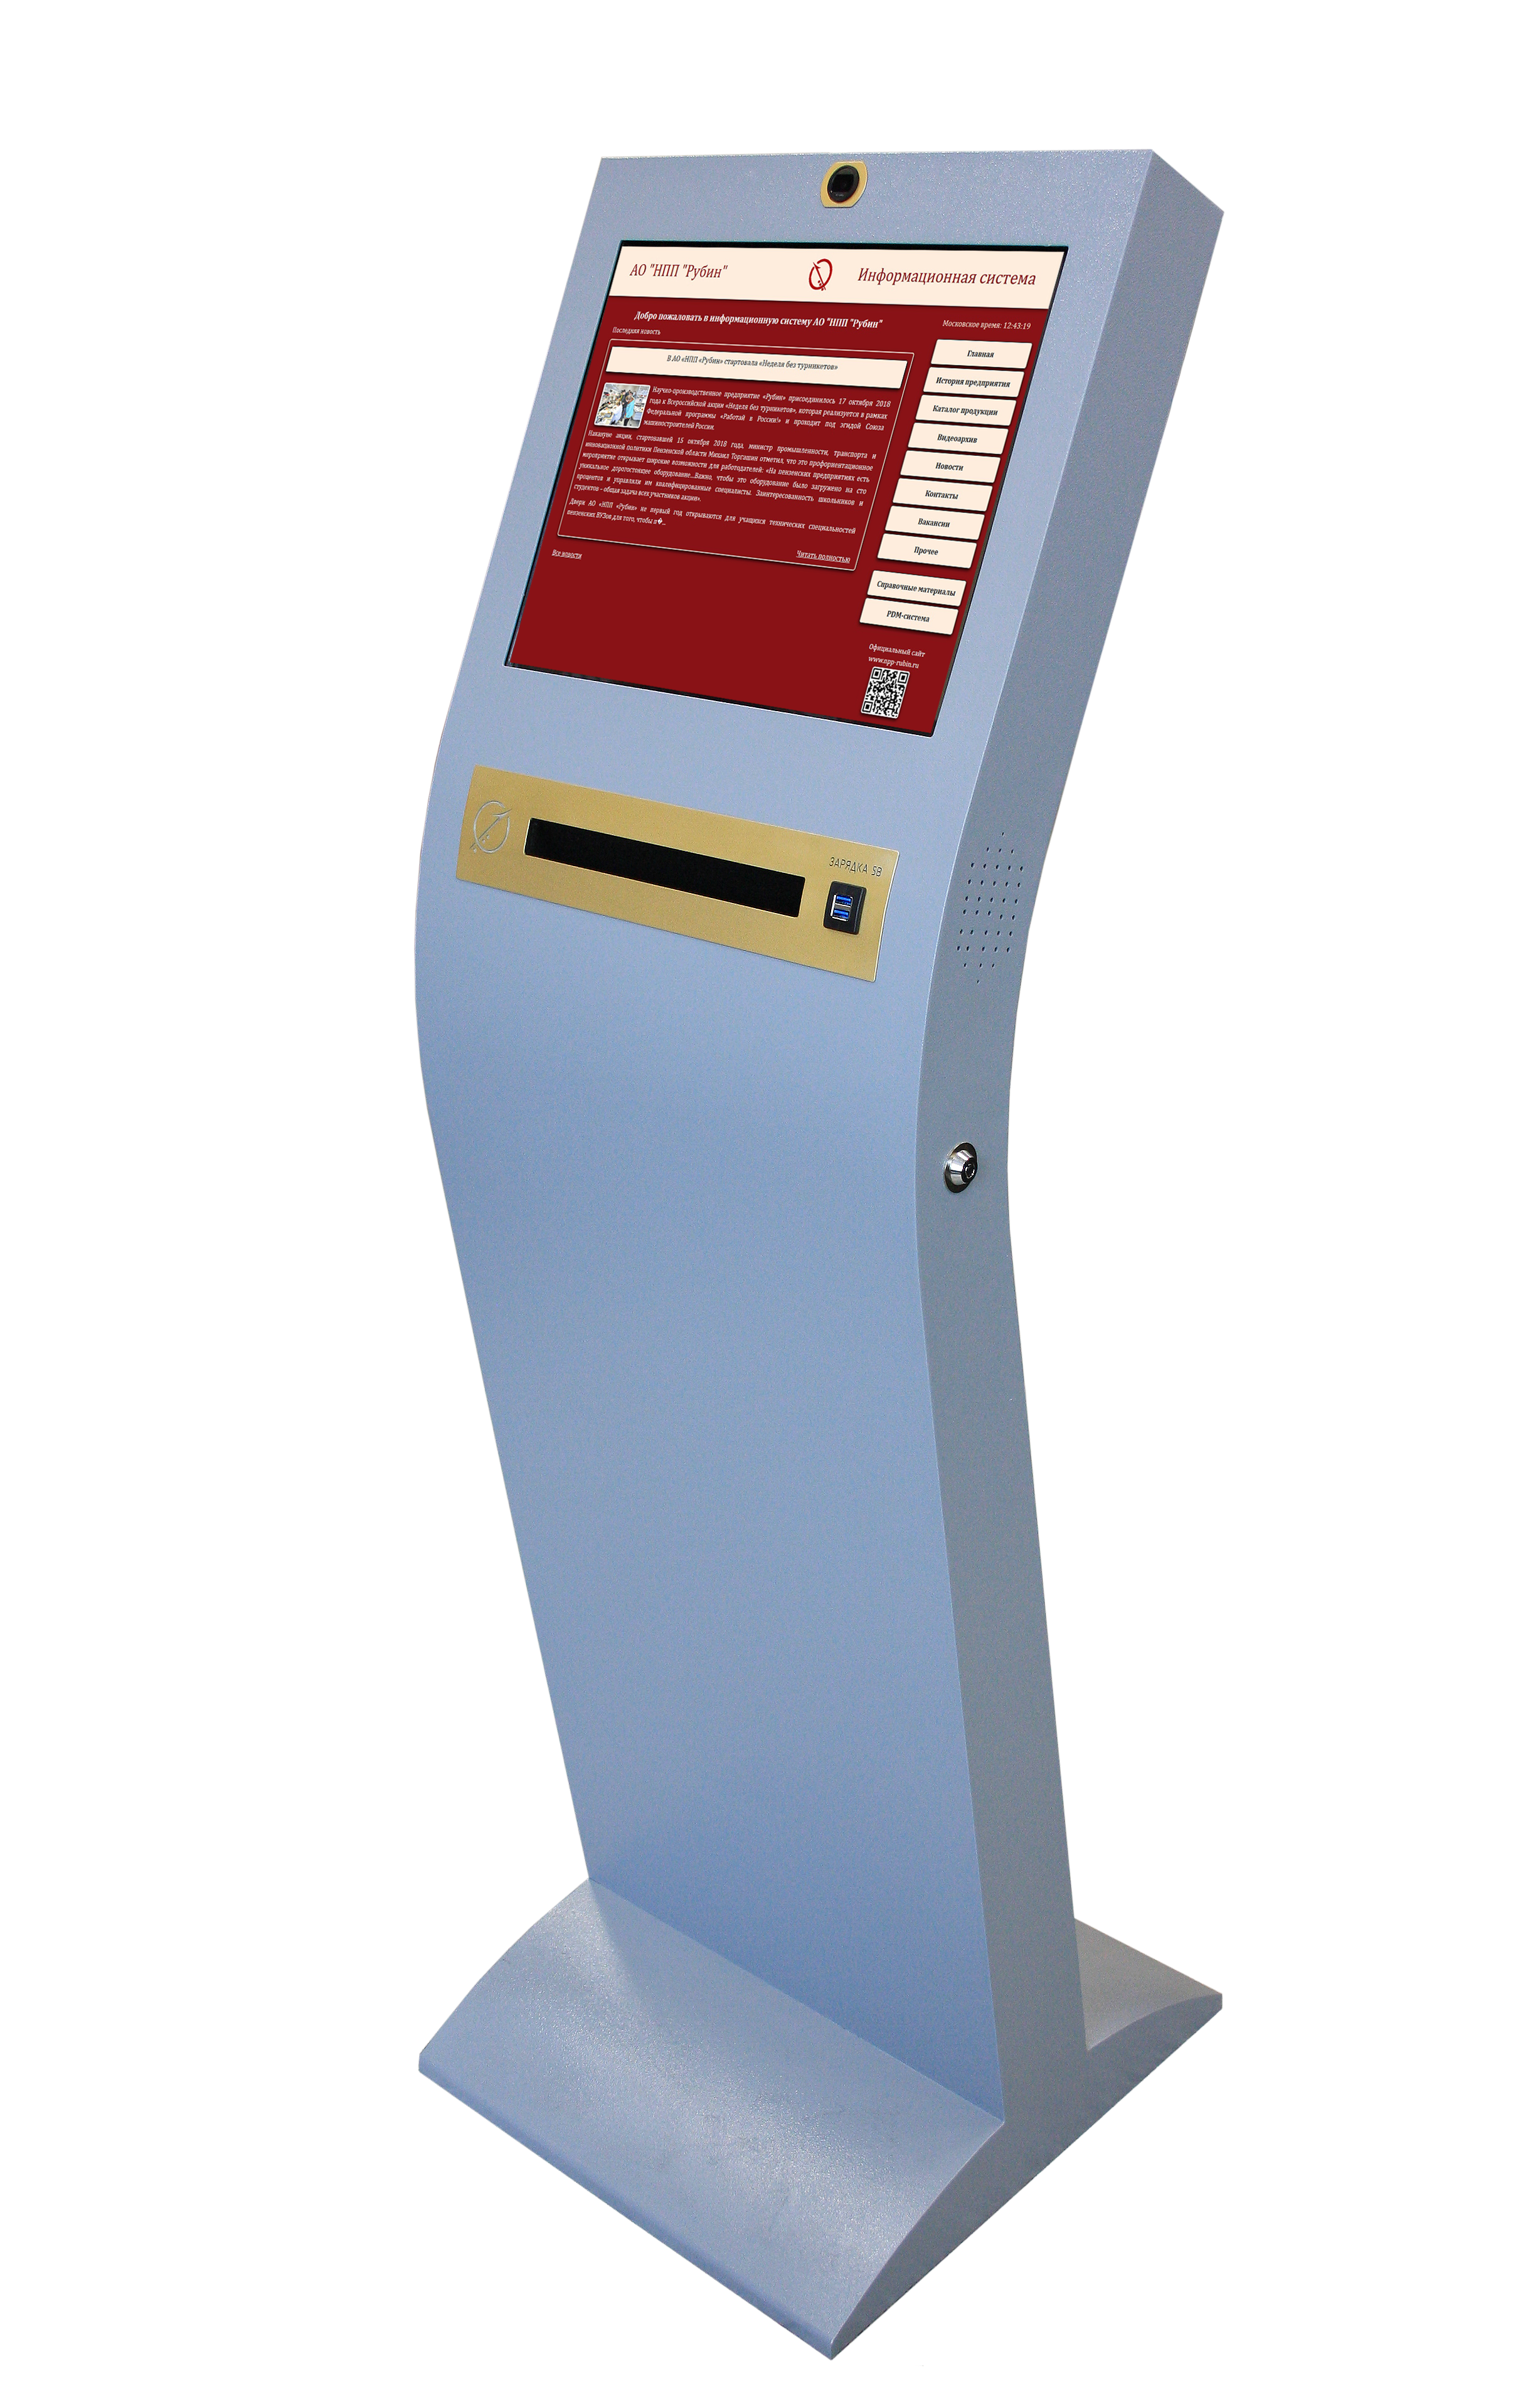 Electronic information kiosk